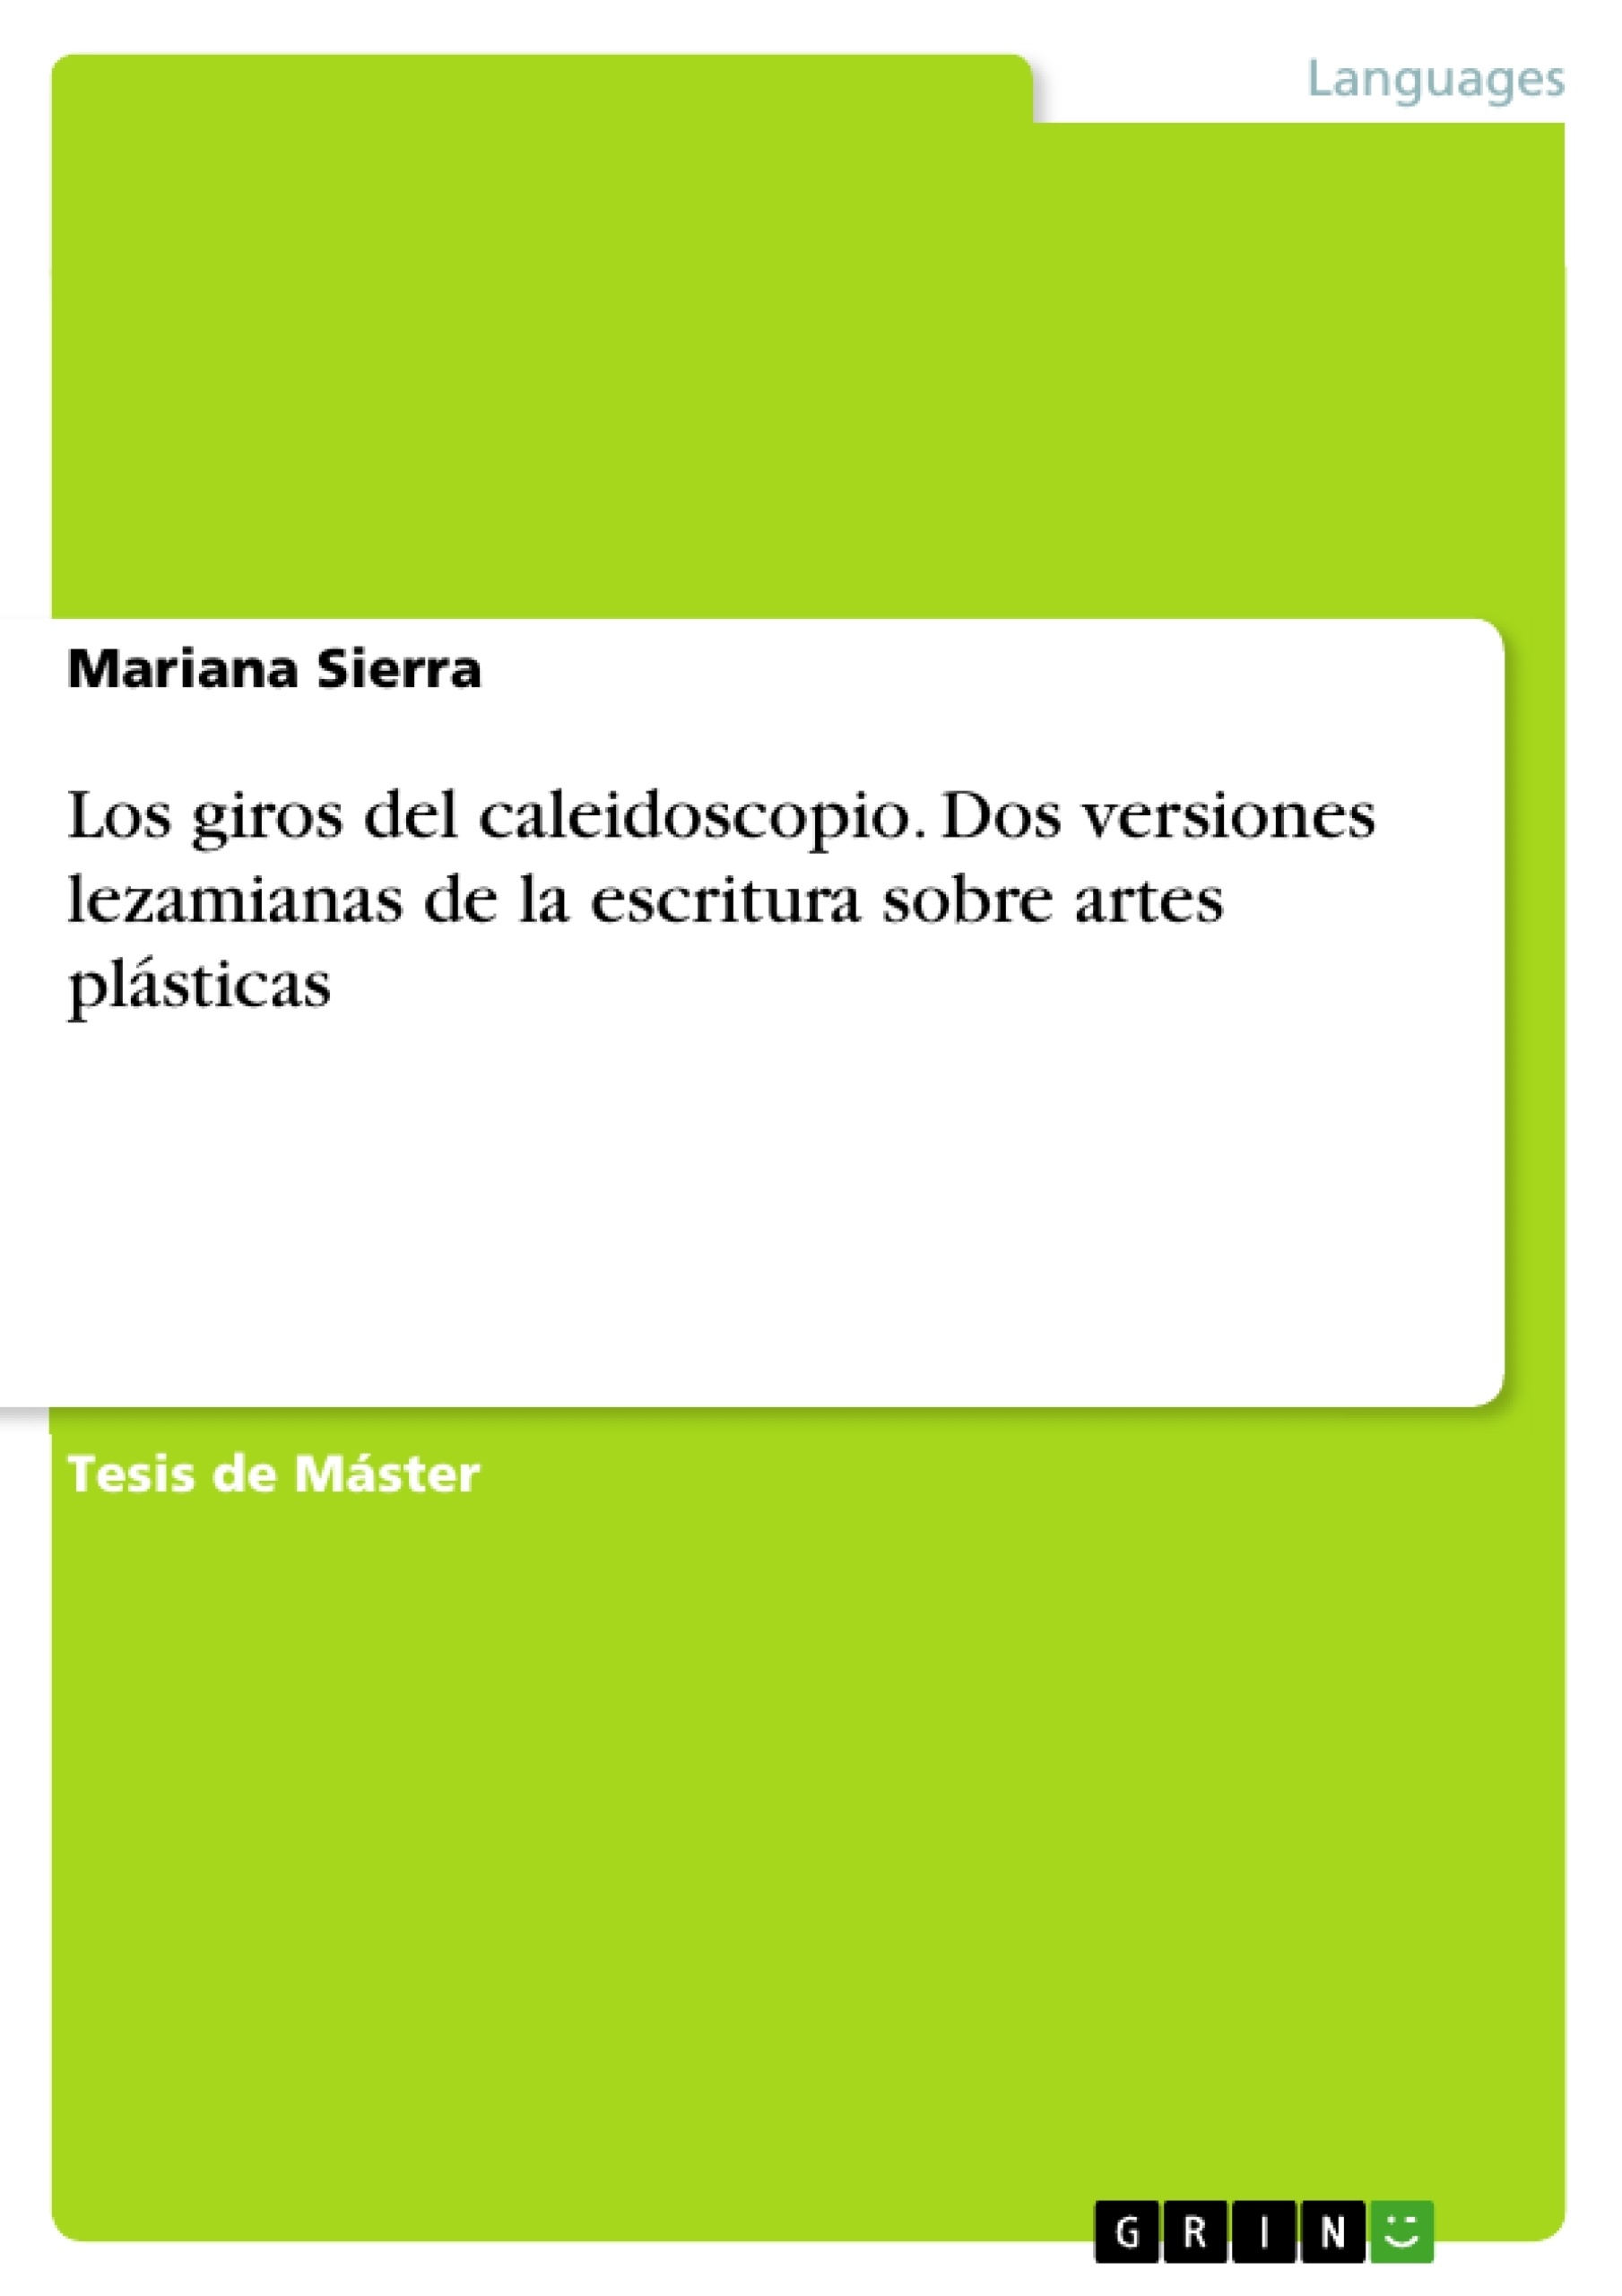 TÉCNICAS DE ILUSTRACIÓN DE FANTASÍA (LIBROS TEÓRICOS USA) (Spanish Edition)